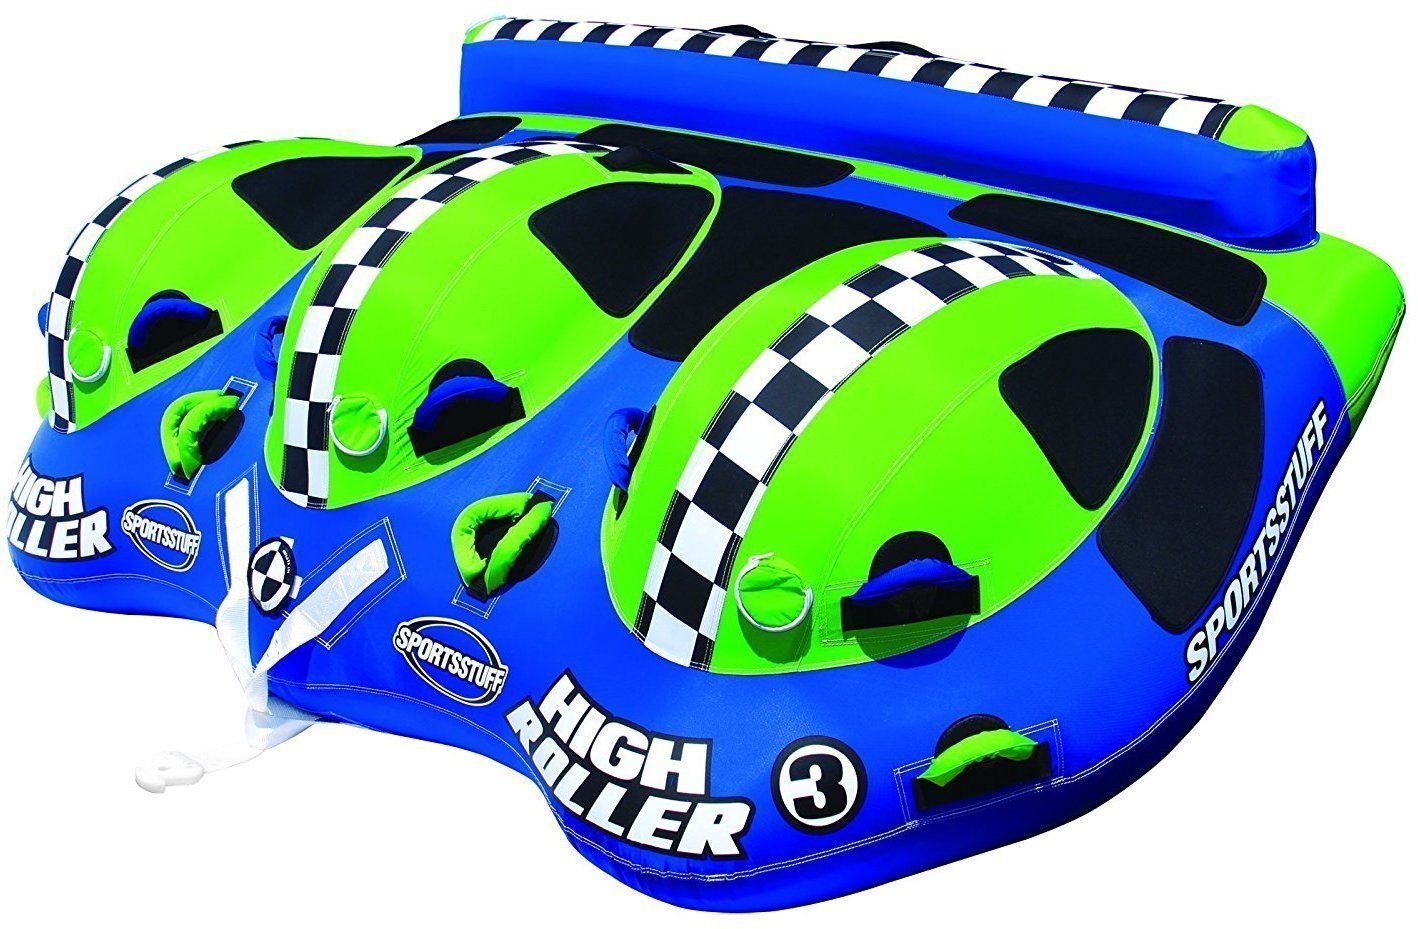 Tuba za vuču Sportsstuff Towable High Roller 3 Personen Blue/Green